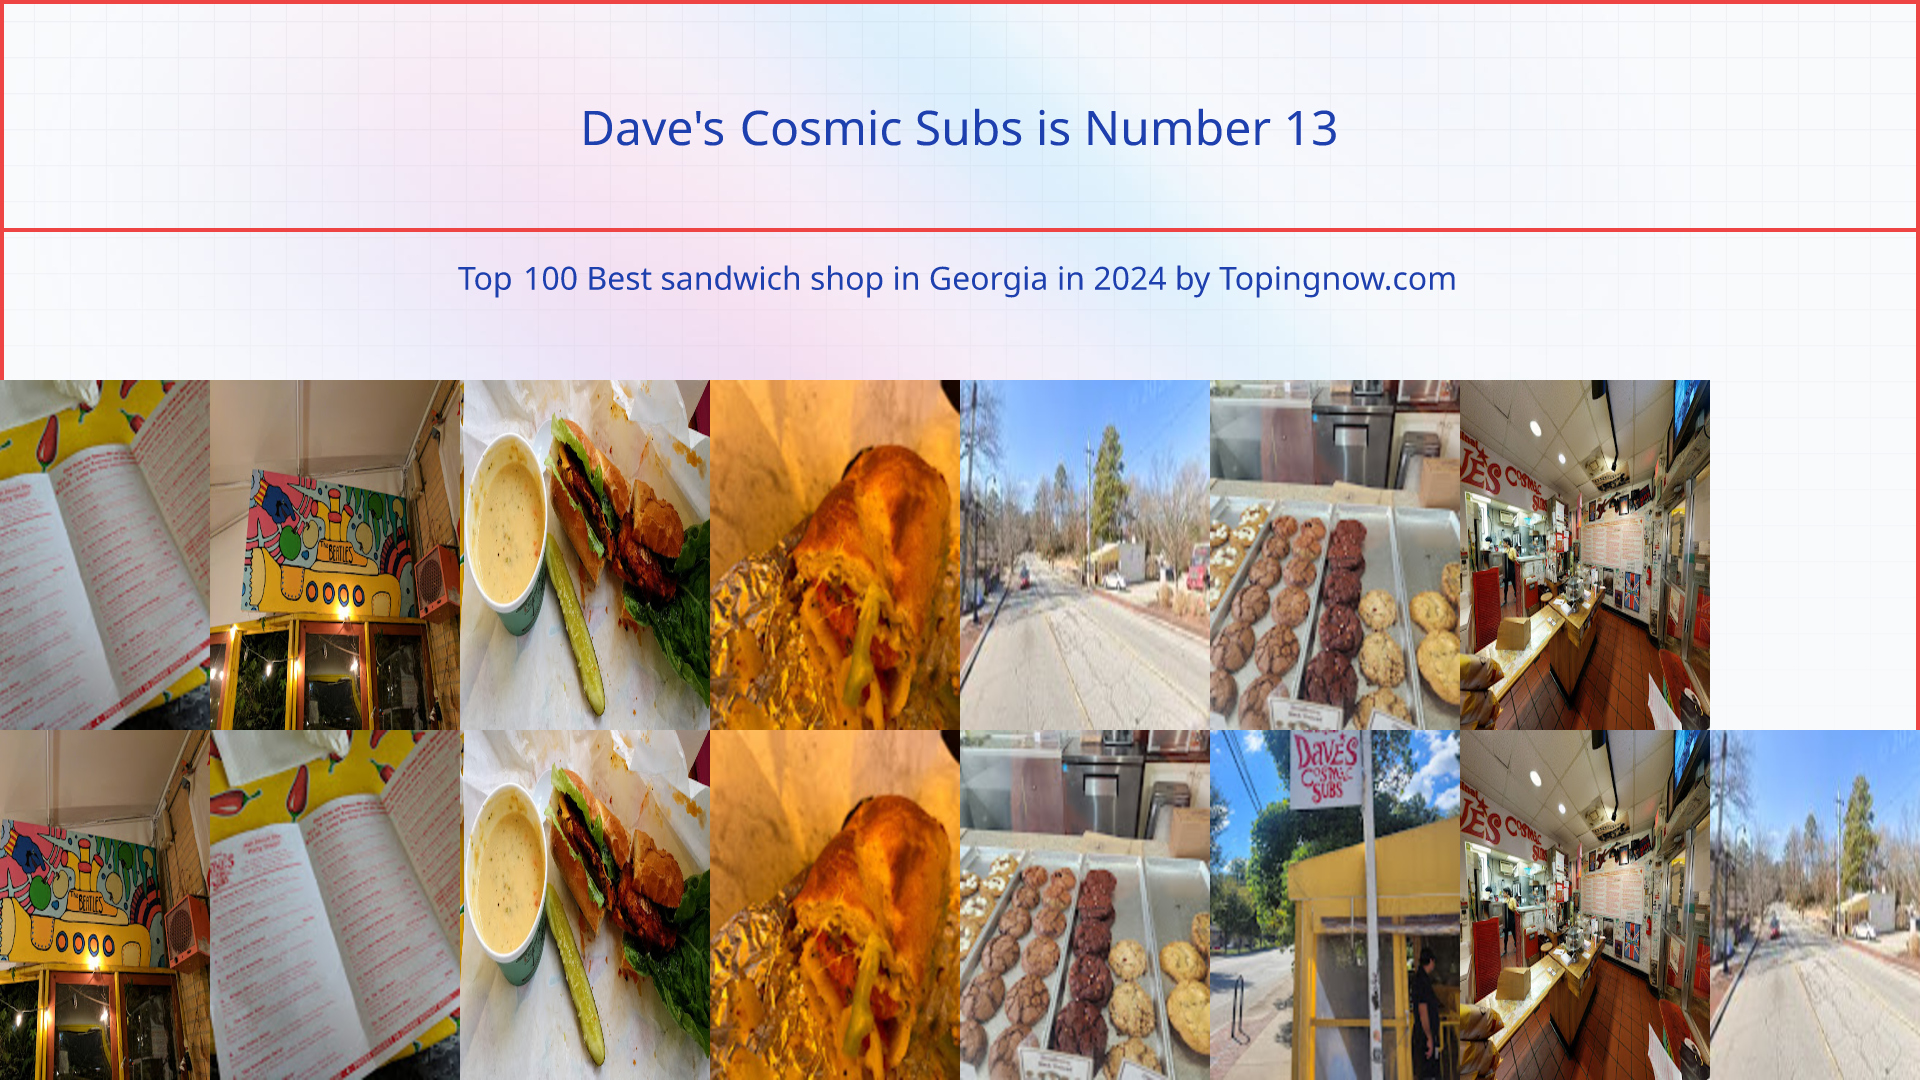 Dave's Cosmic Subs: Top 100 Best sandwich shop in Georgia in 2024